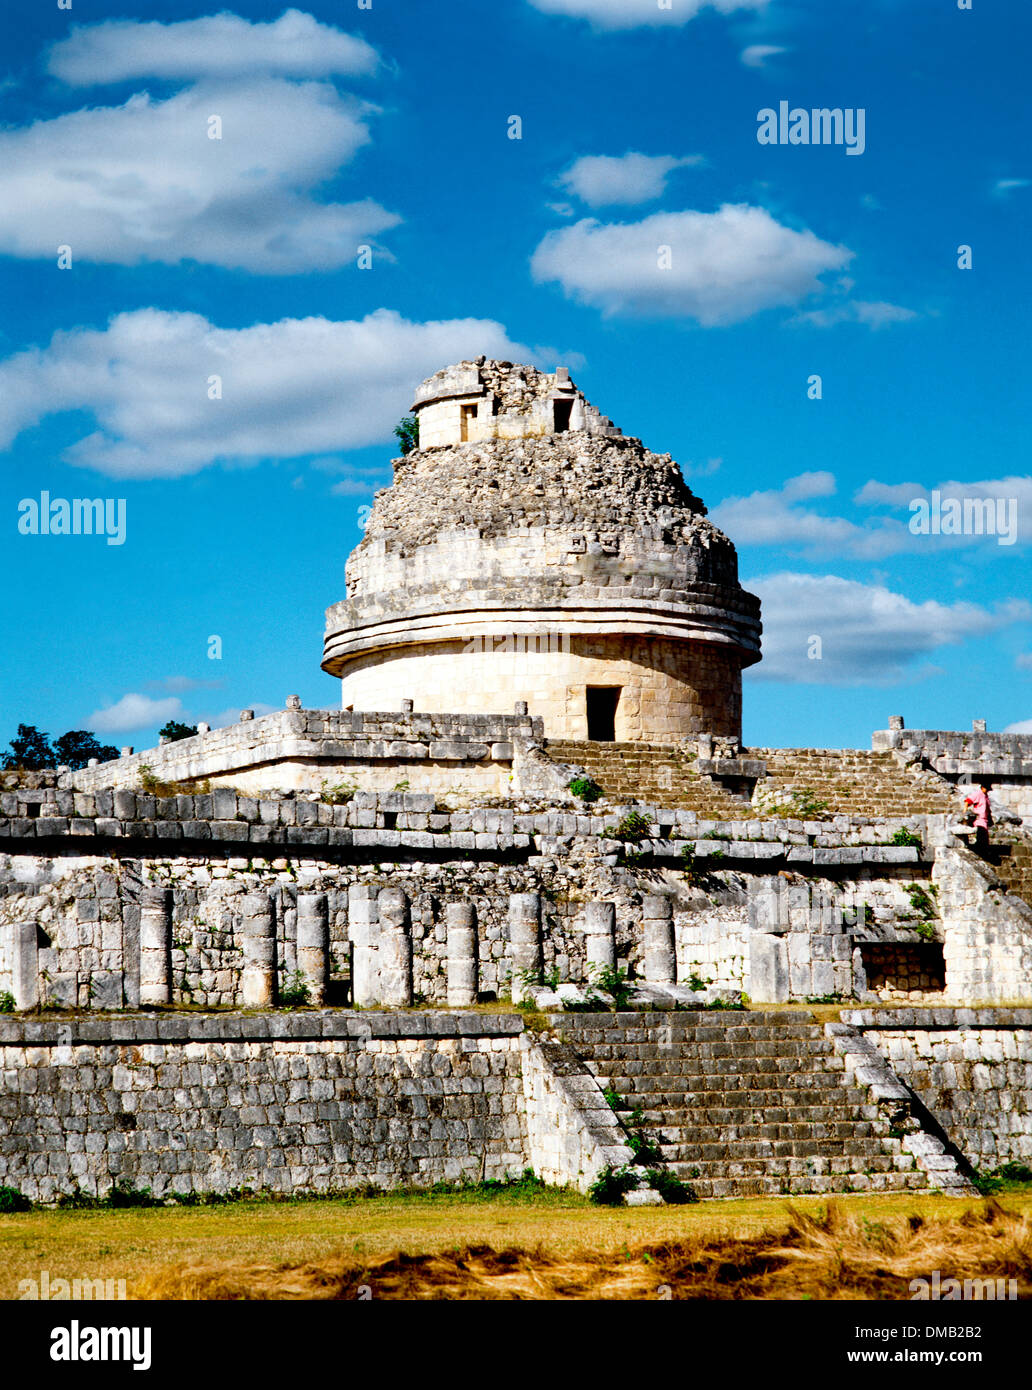 L 'El Caracol' temple, à l'observatoire d'anciennes ruines de Chichen Itza, Yucatan, Mexique Banque D'Images